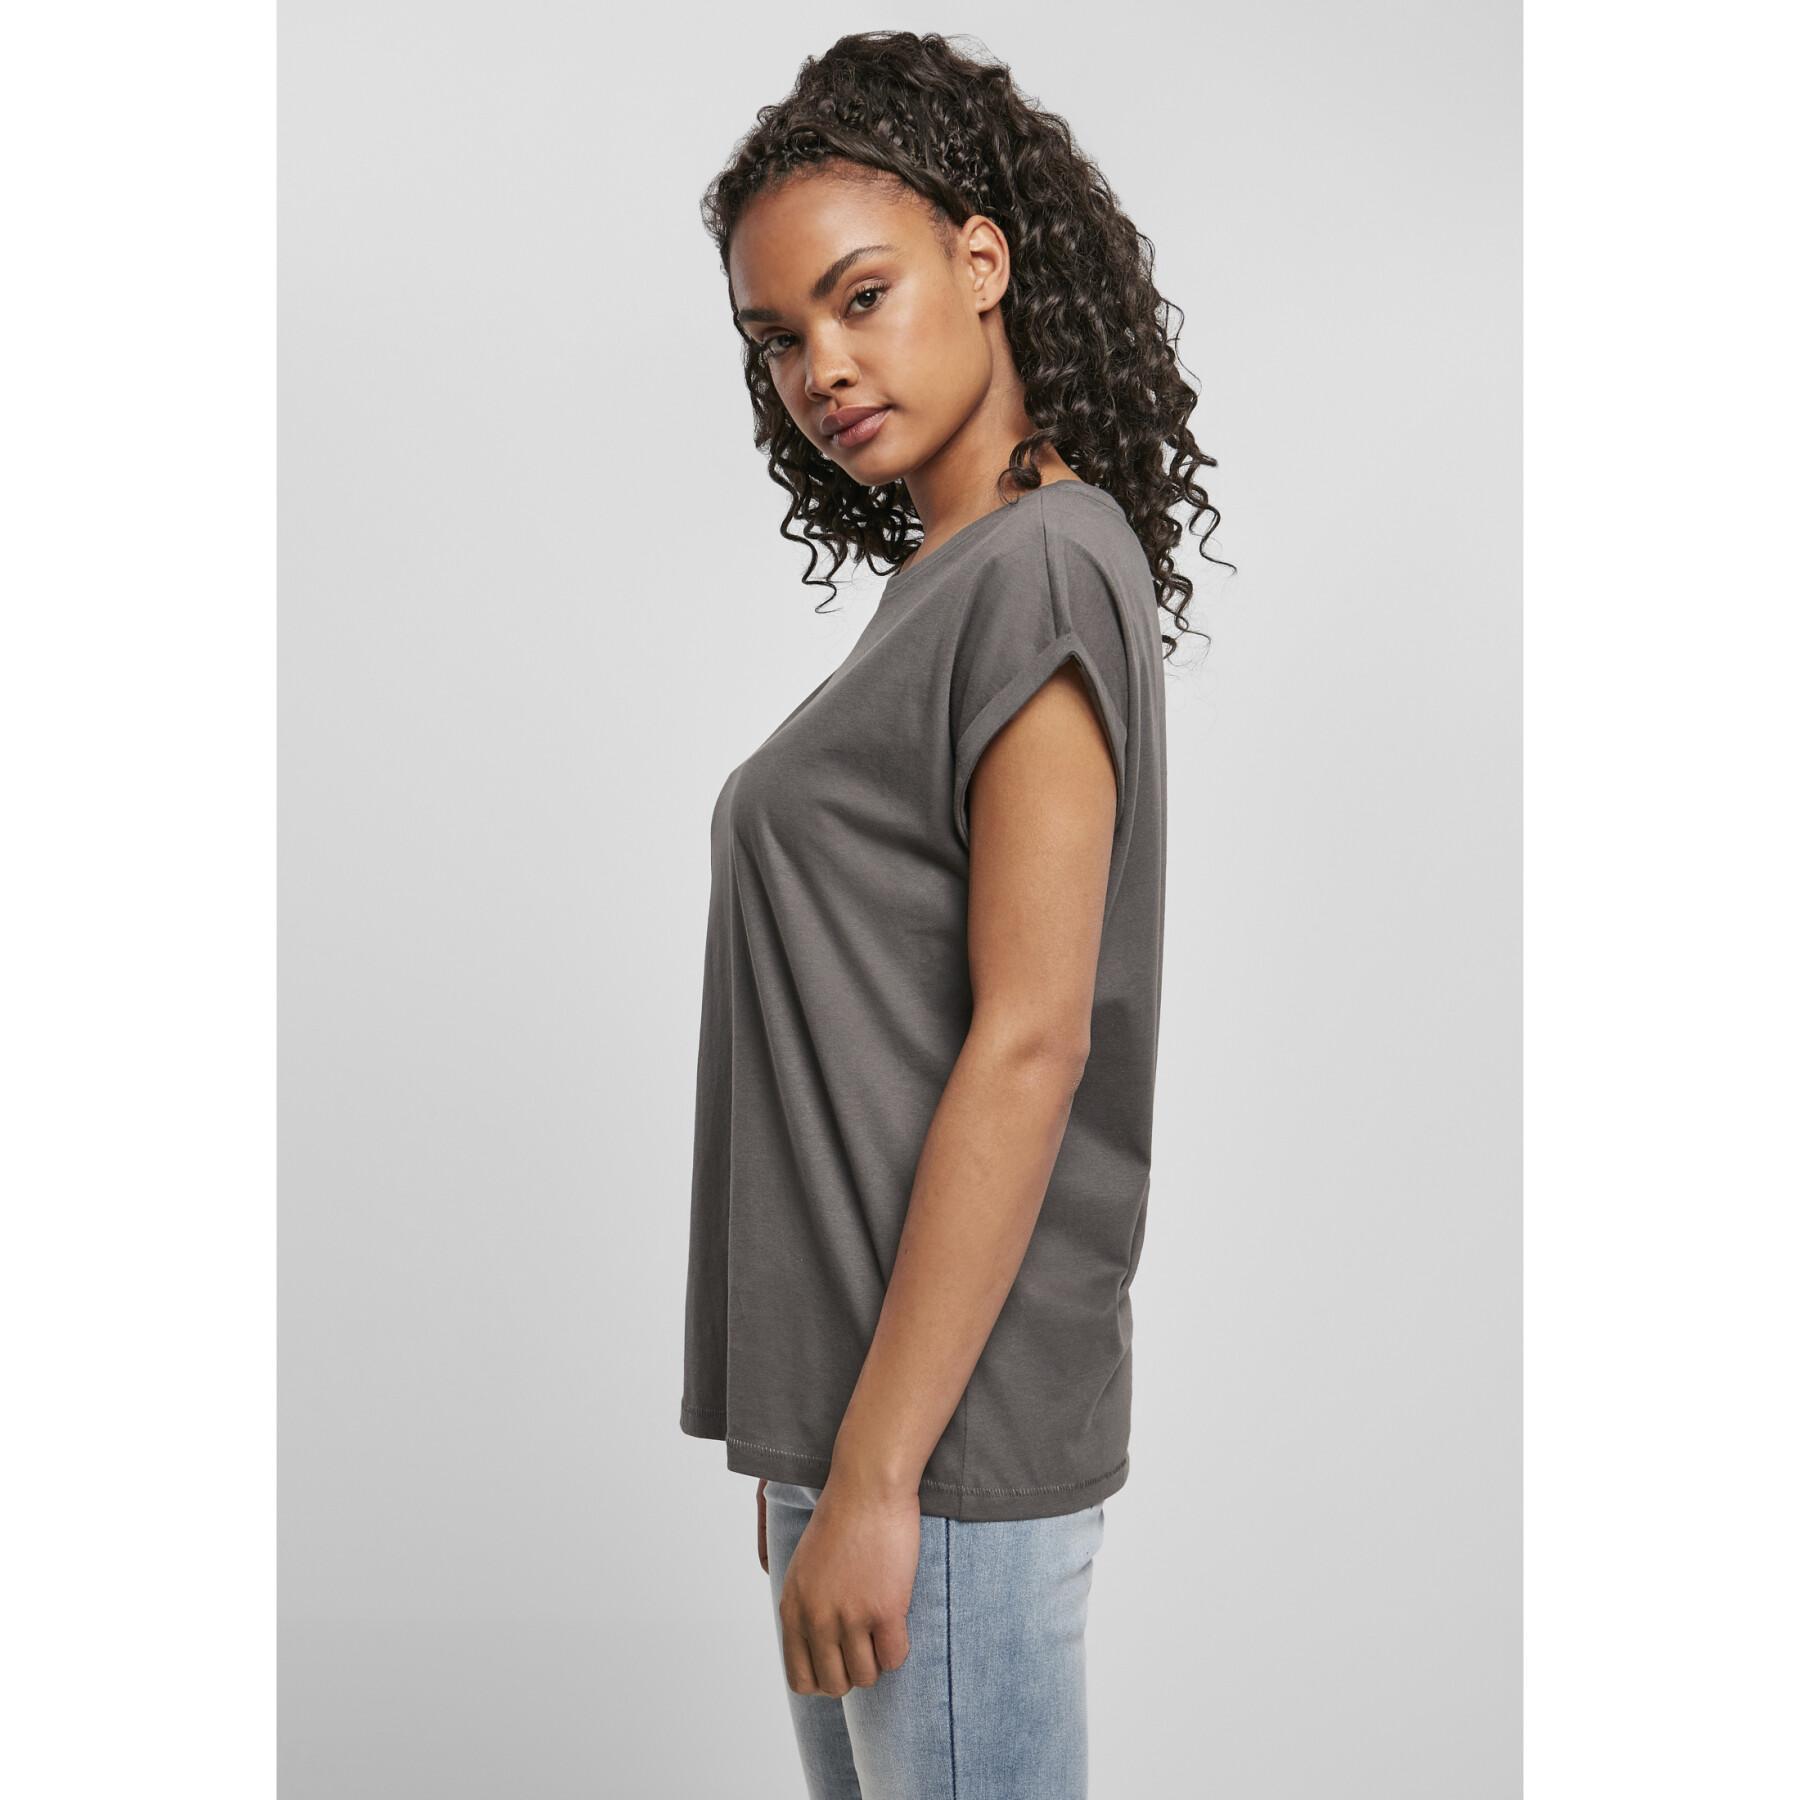 T-shirt femme Urban Classics extended shoulder-grandes tailles